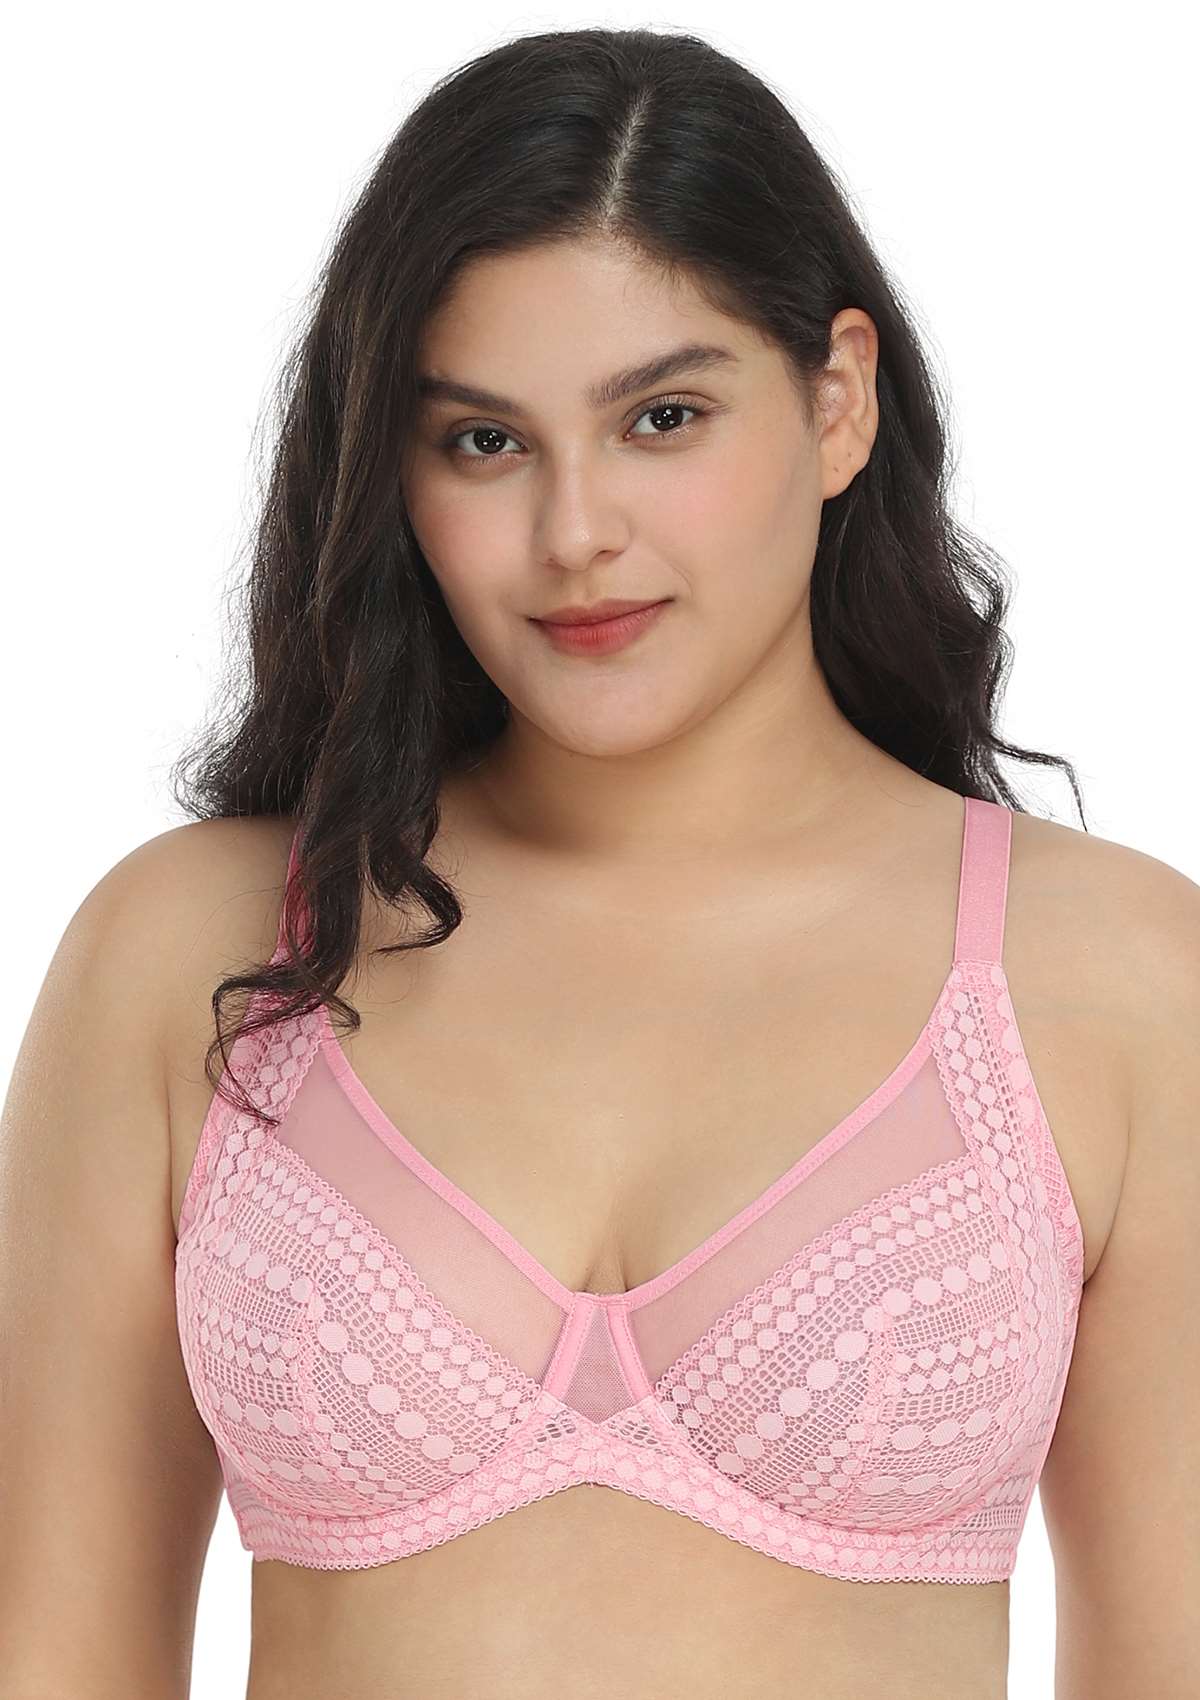 HSIA Heroine Lace Unlined Bra: Bra That Hides Back Fat - Plus Size - Pink / 44 / C